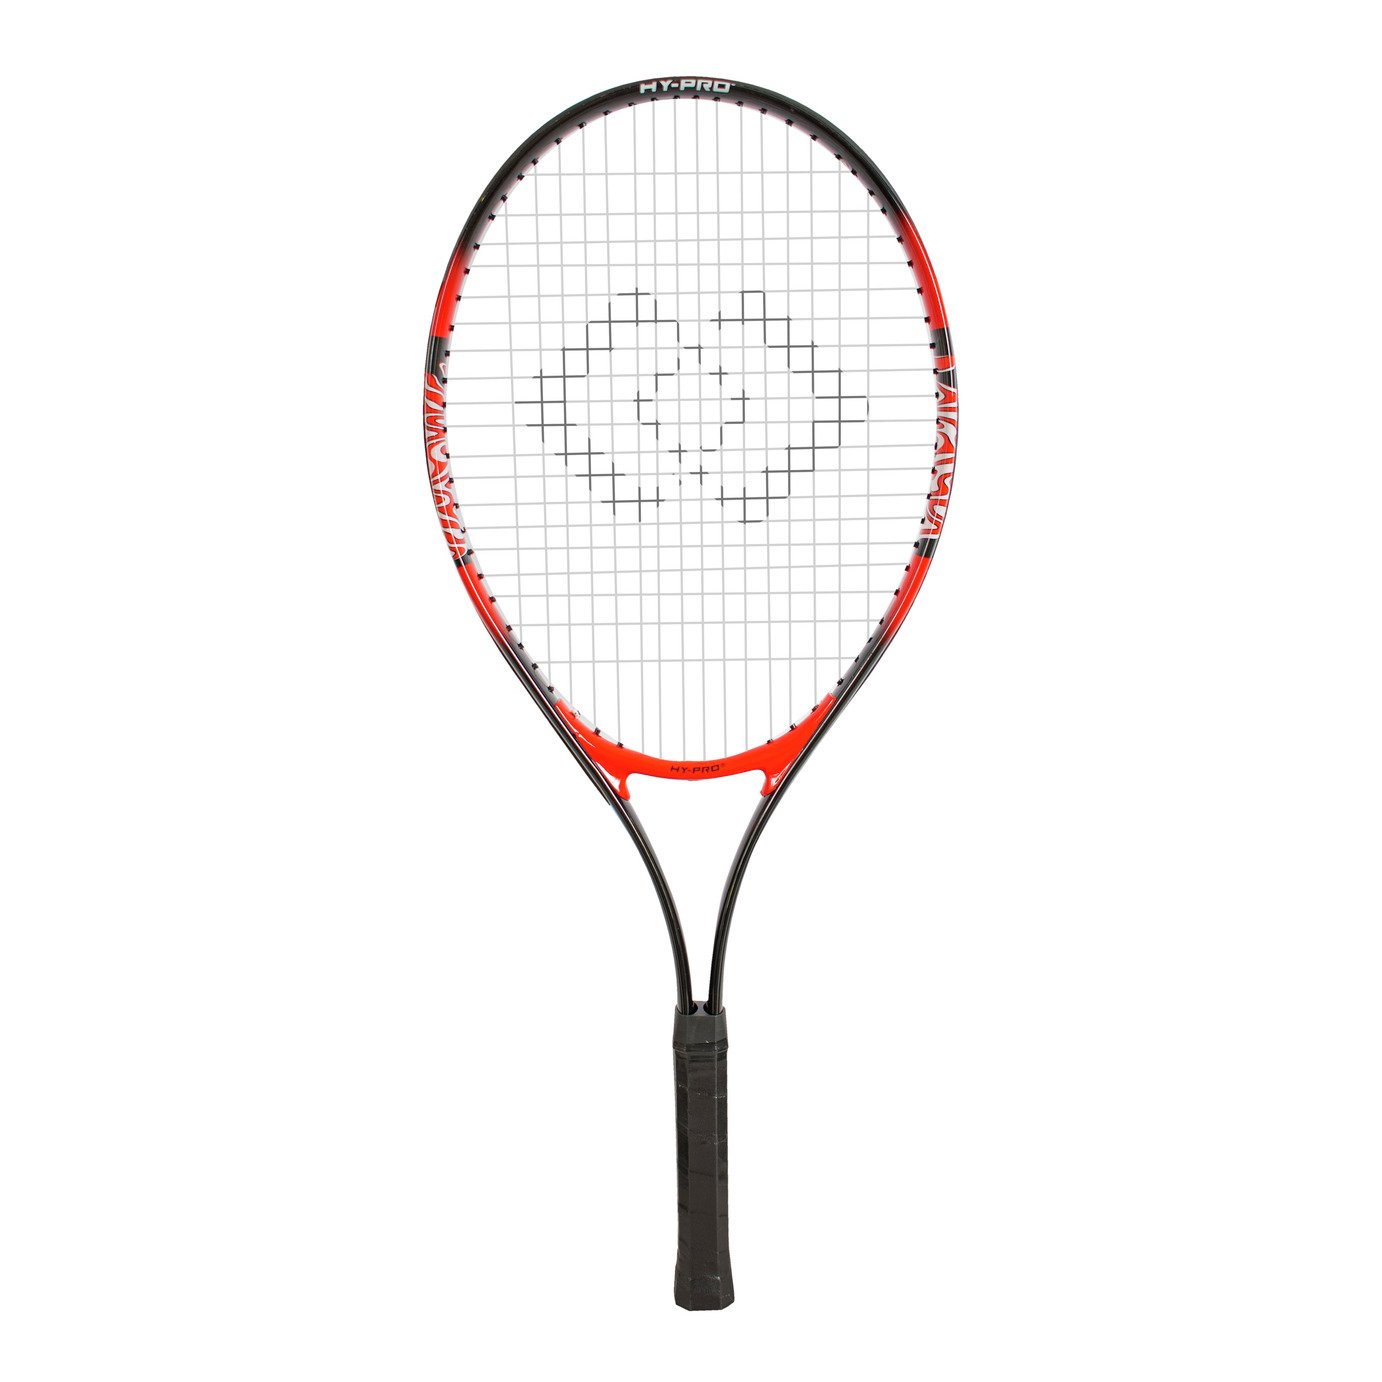 Hy-Pro 27 inch Tennis Racket